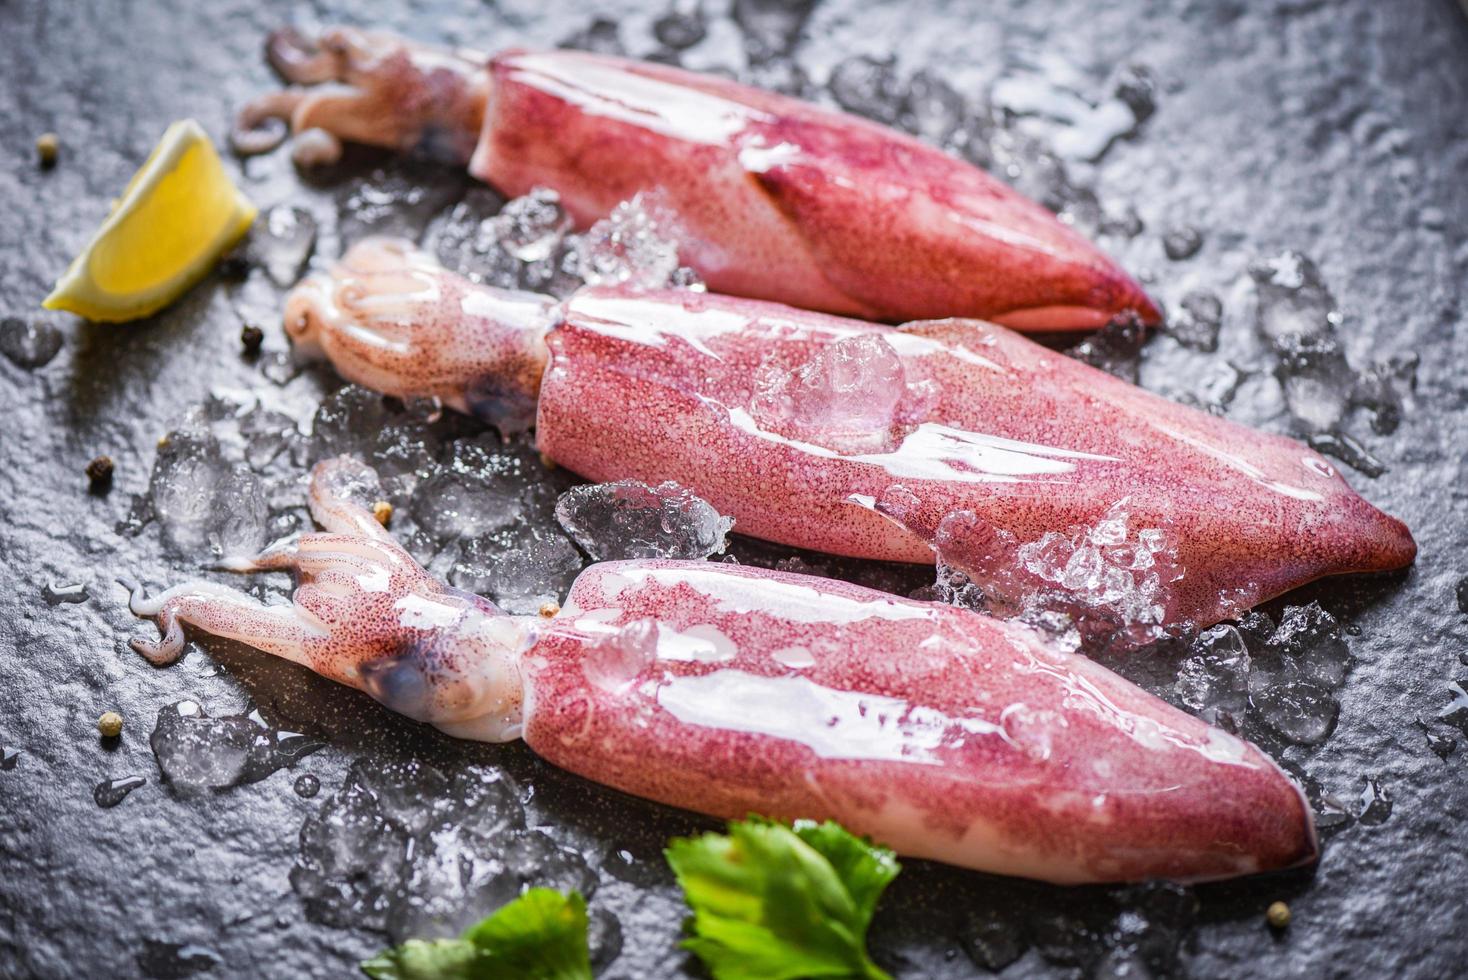 Calamares crudos sobre hielo con limón en el plato oscuro mercado de mariscos - calamares frescos pulpo o sepia para comida cocinada restaurante de ensaladas foto